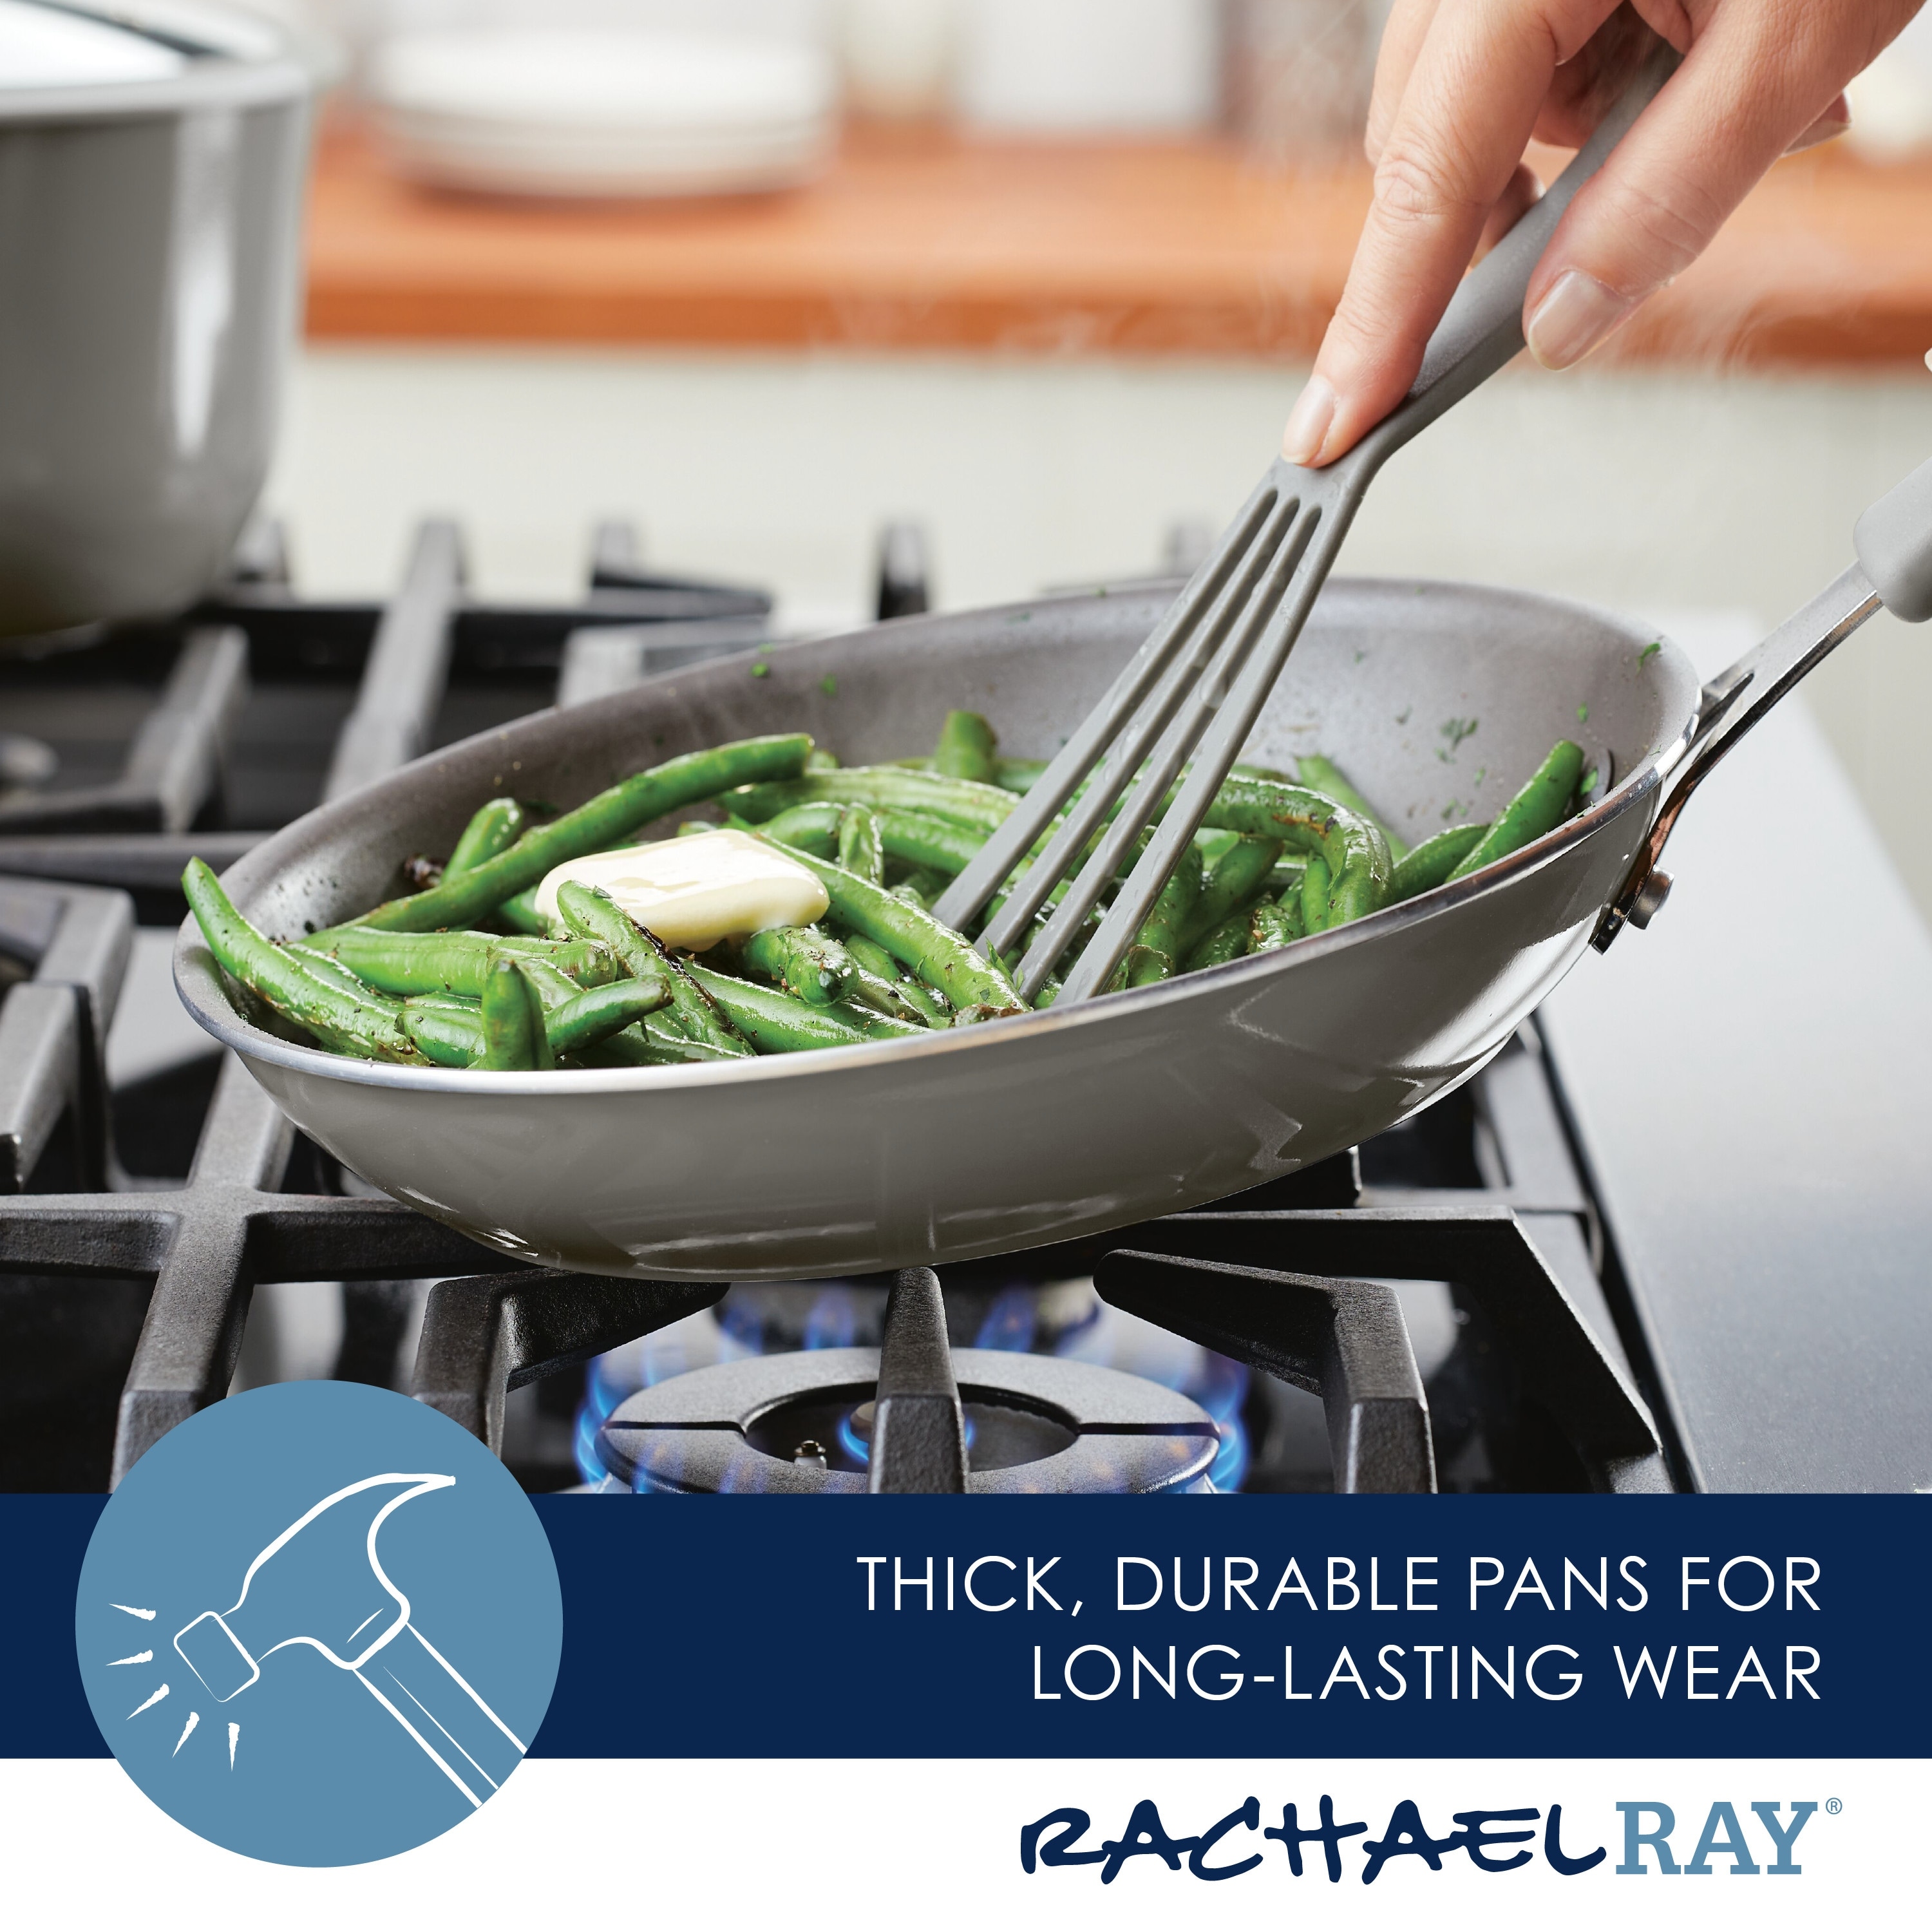 Rachael Ray Get Cooking! Aluminum Nonstick Cookware Pots and Pans Set - Bed  Bath & Beyond - 38077559